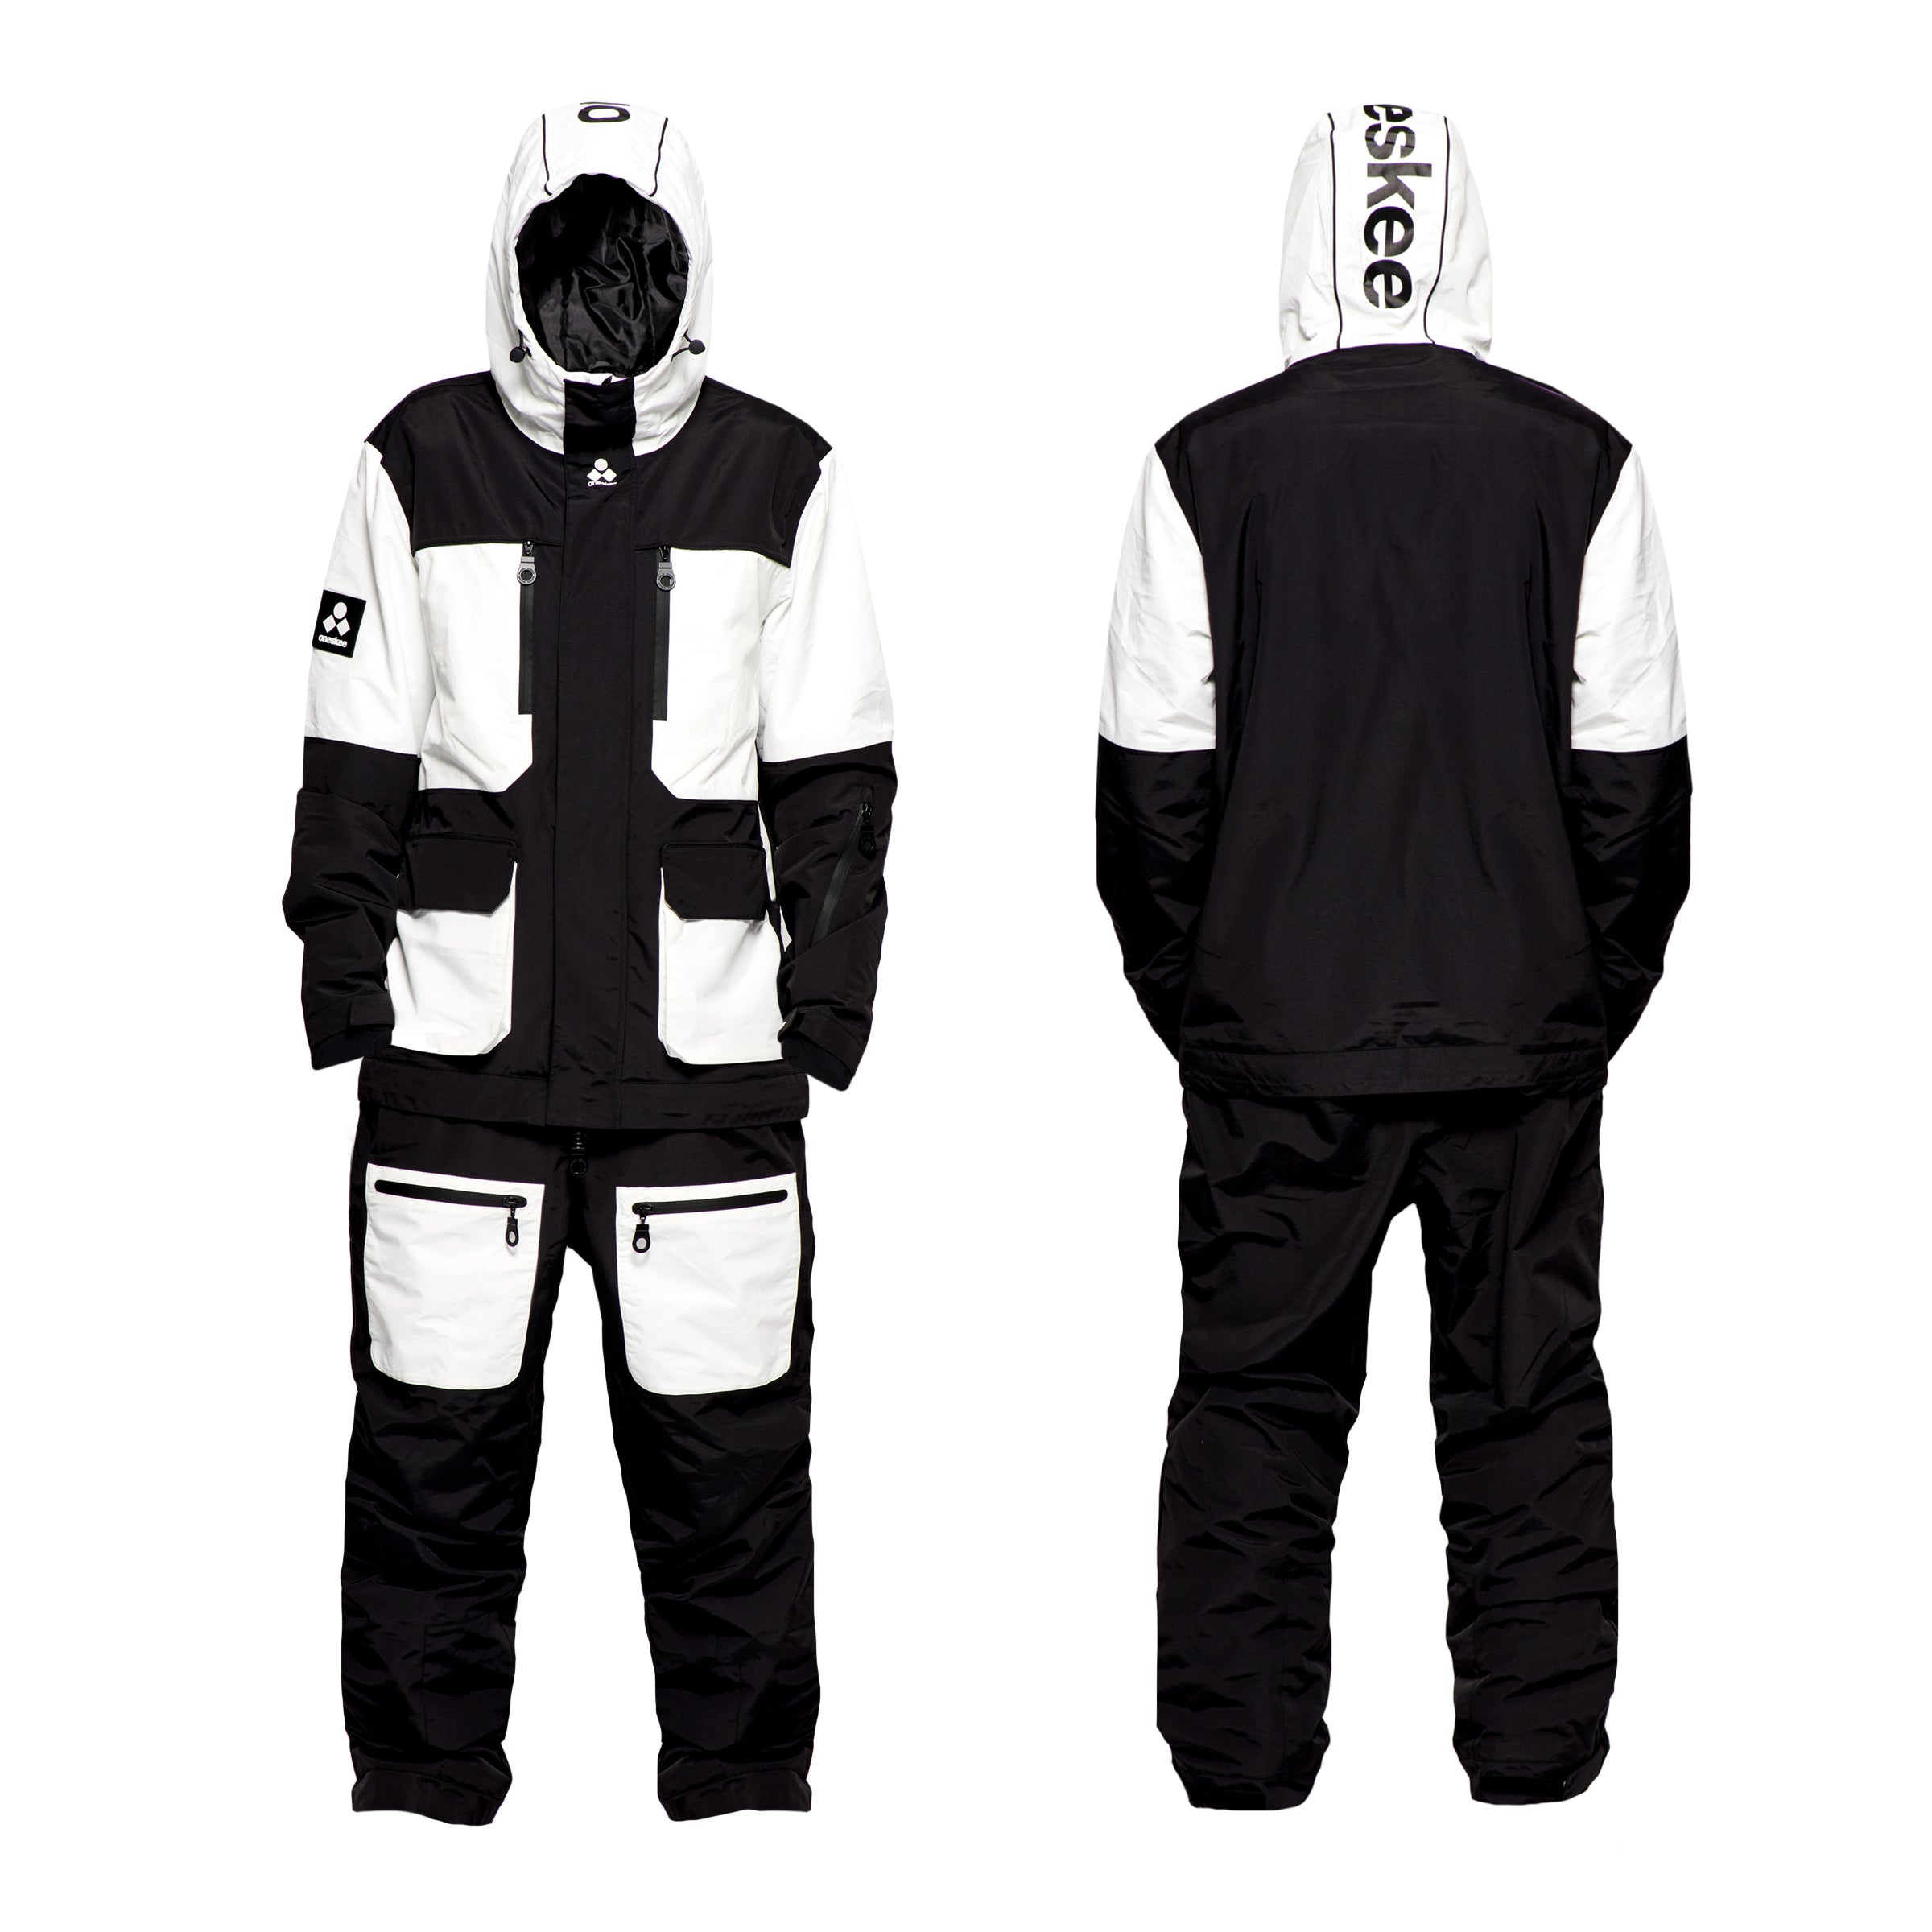 Men's 2-in-1 Snow Suit, Black & White